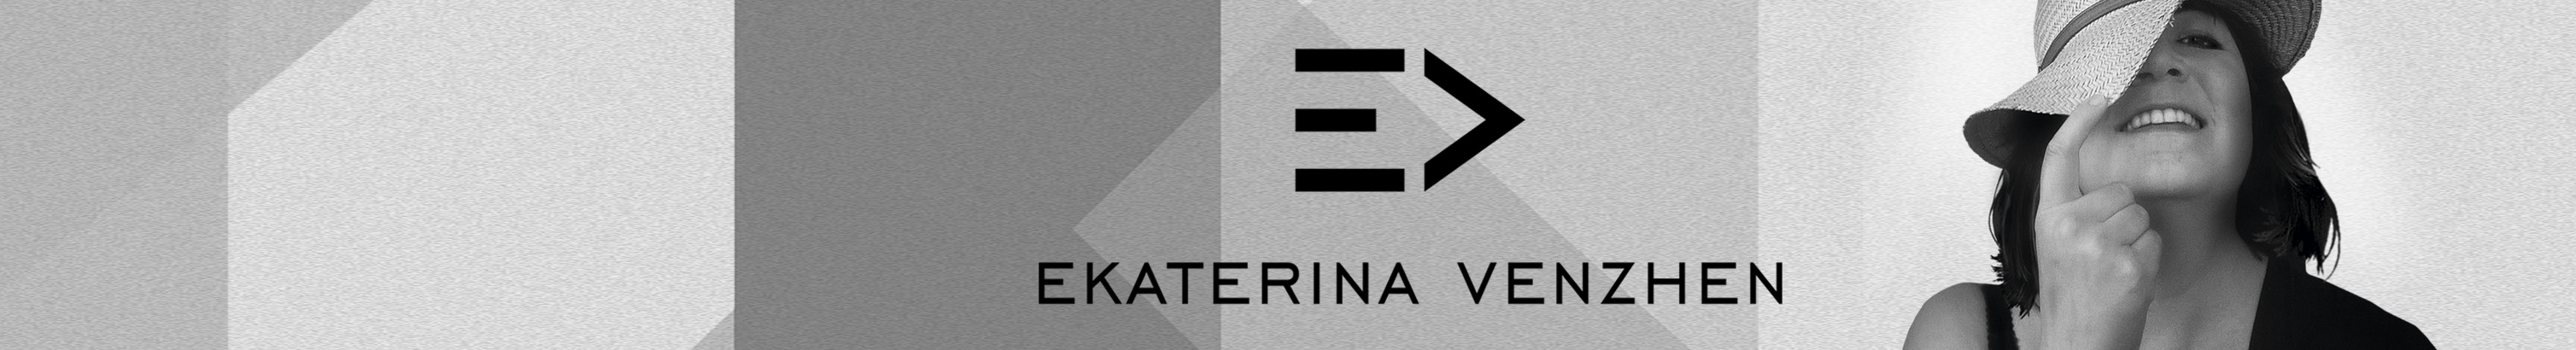 Ekaterina Venzhen's profile banner